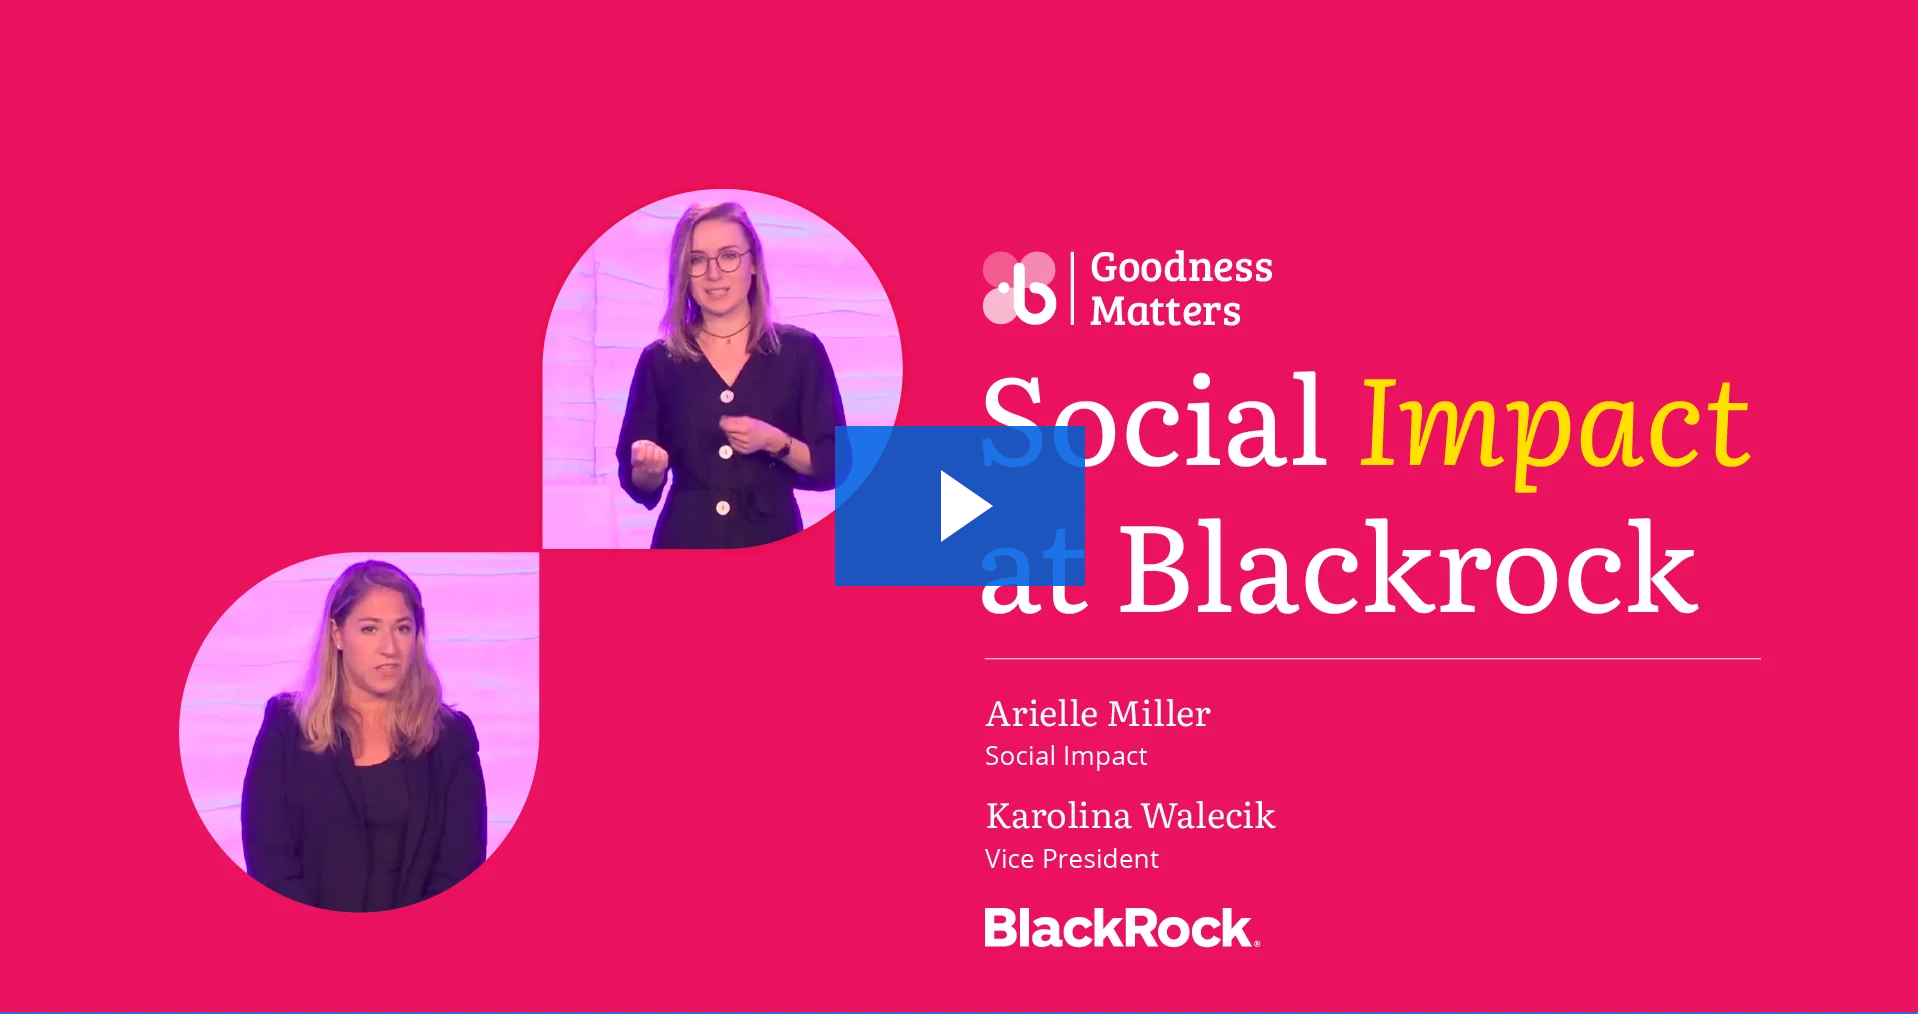 Blackrock - Social Impact